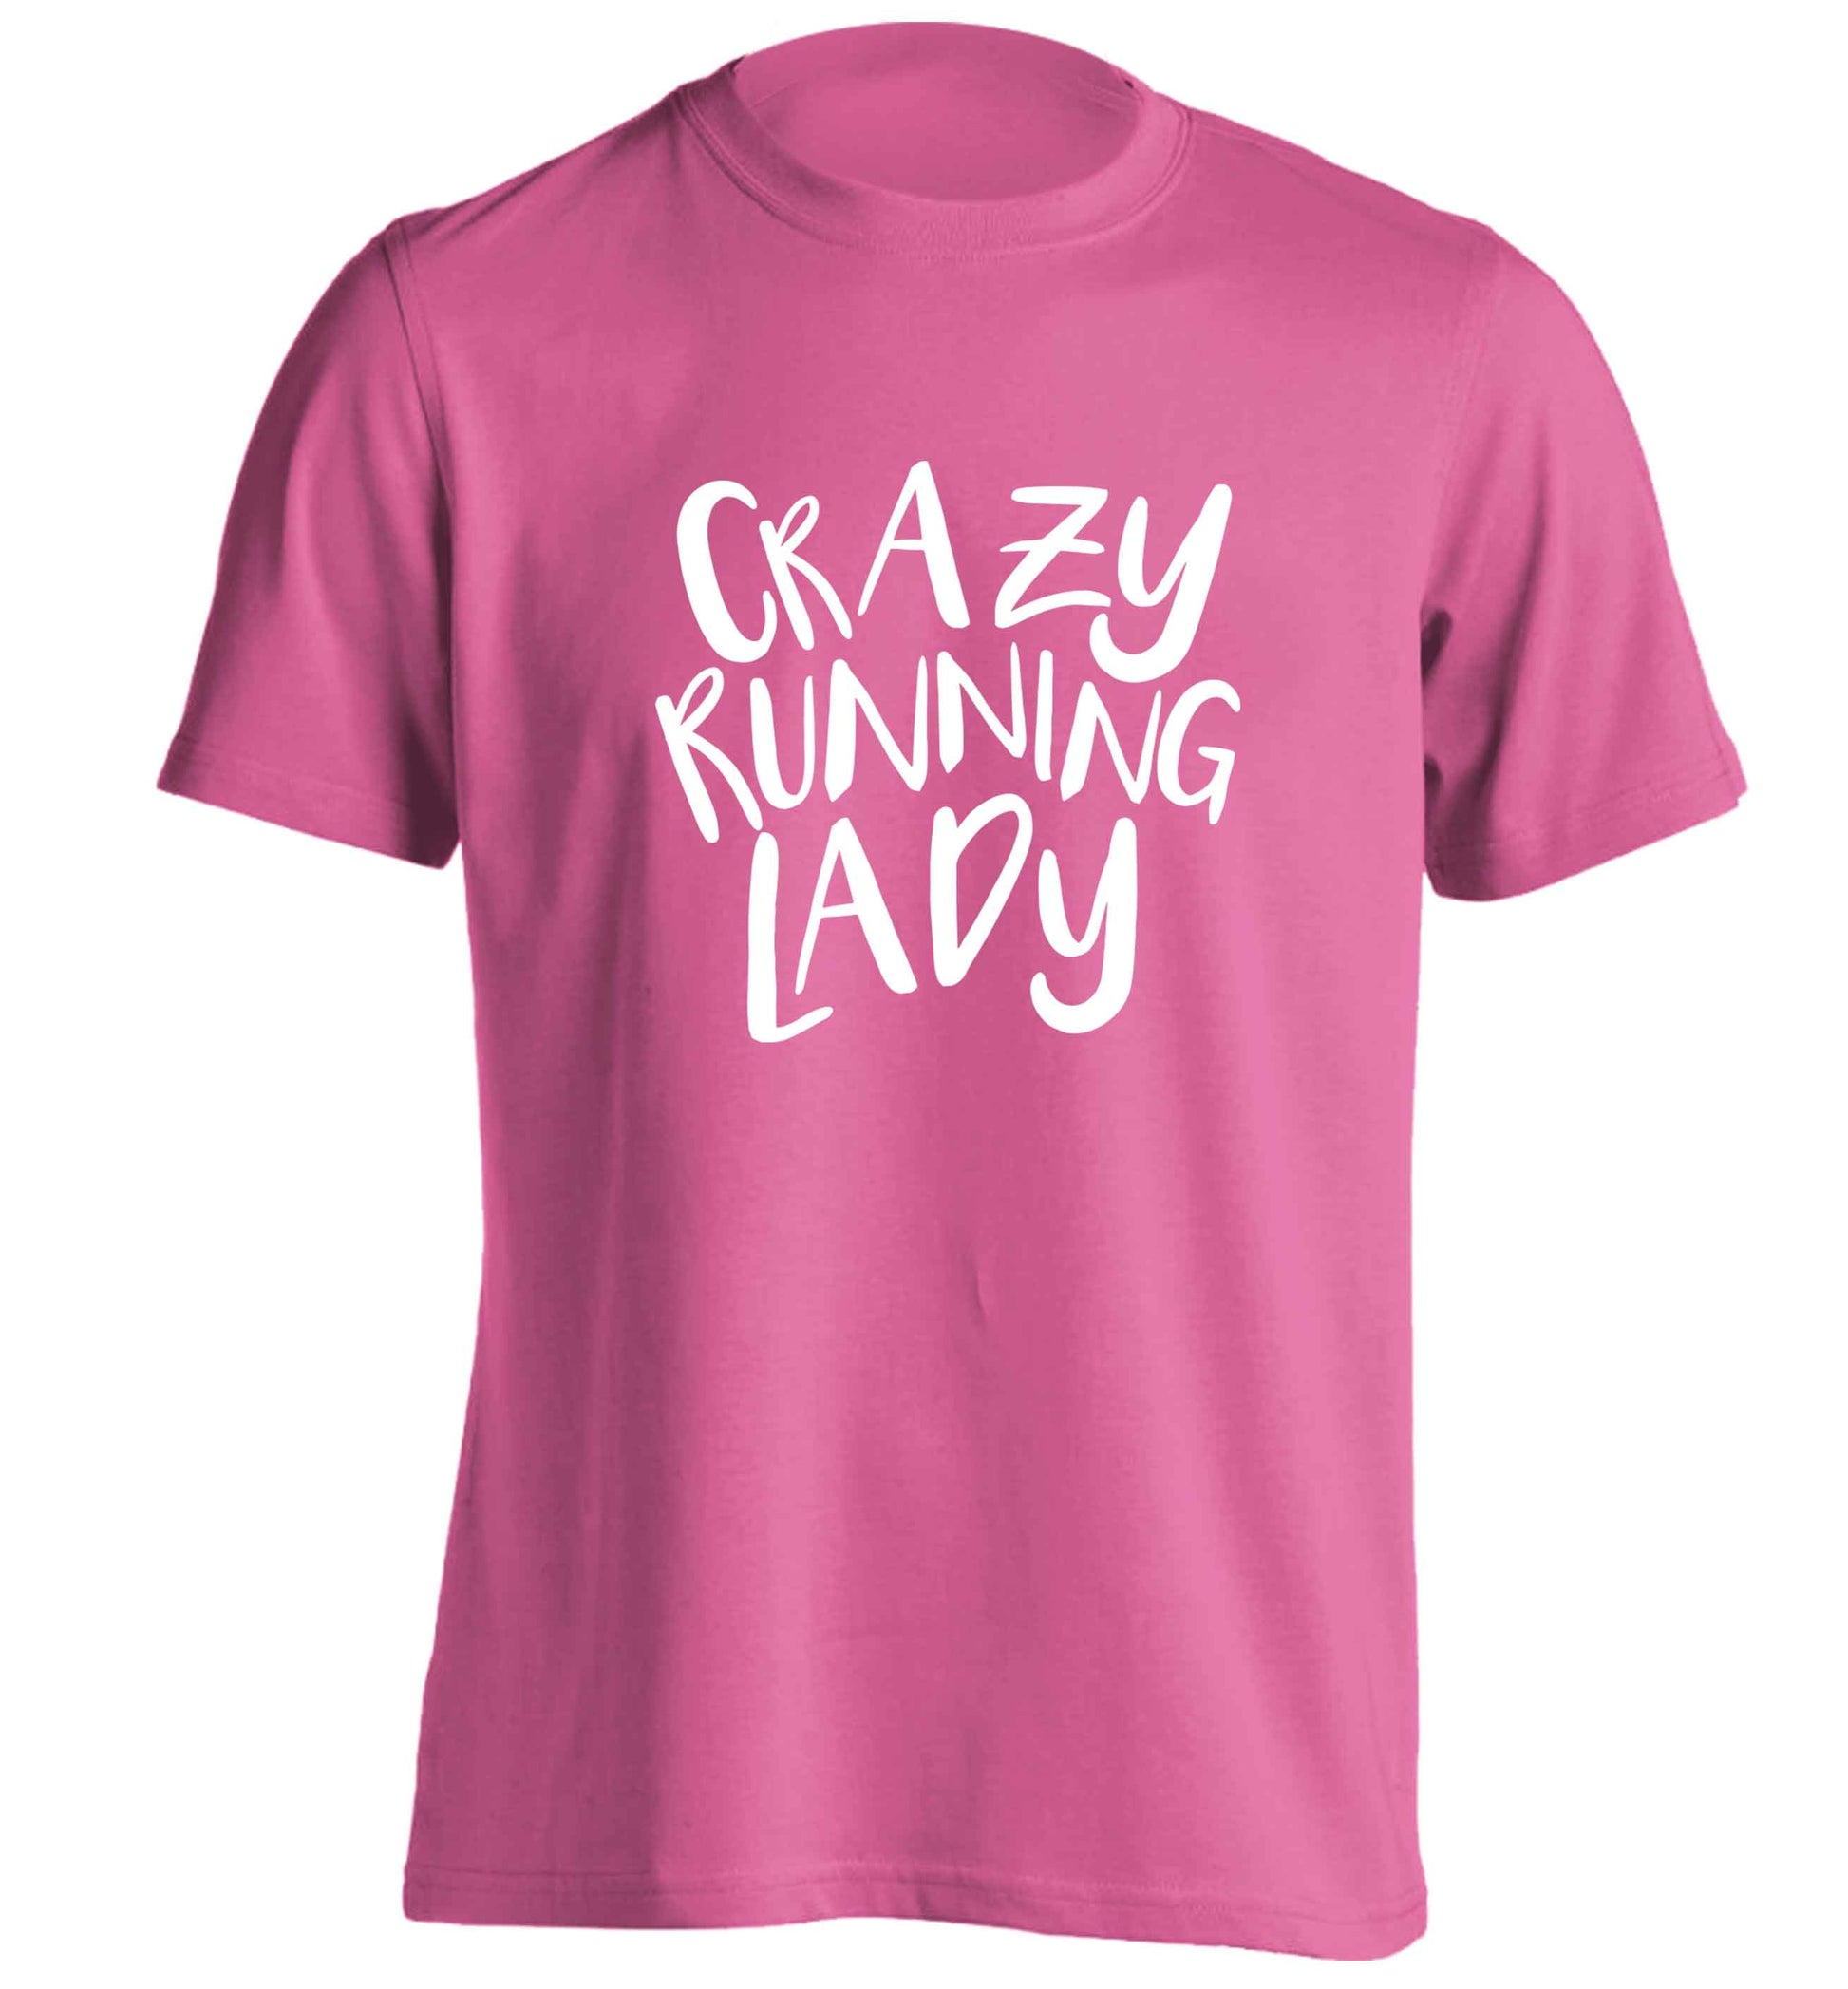 Crazy running lady adults unisex pink Tshirt 2XL